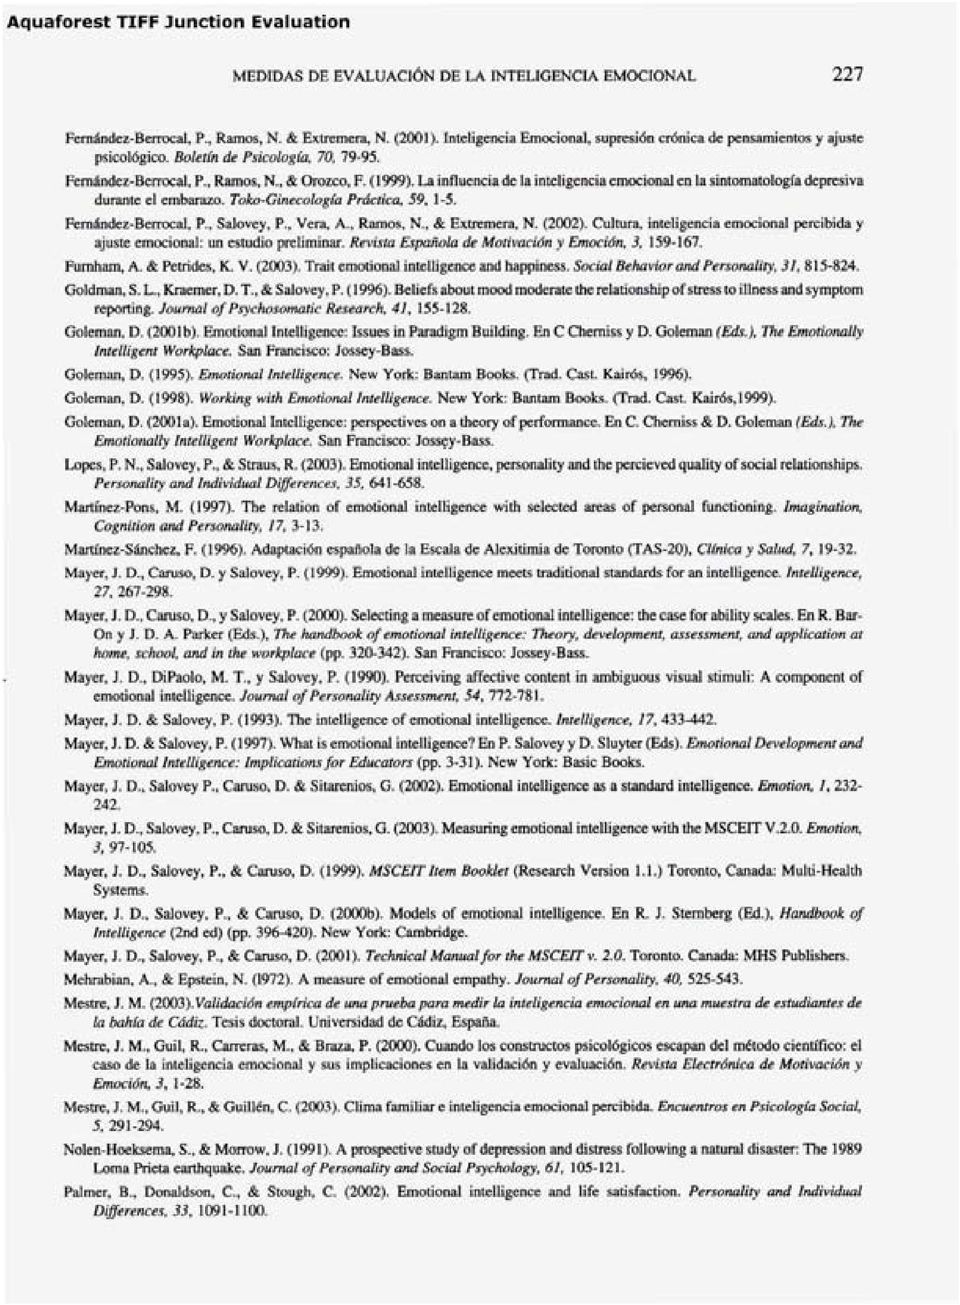 Toko-Ginecologia Práctica, 59, 1-5. Fernández-Berrocal, P., Salovey, P., Vera, A., Ramos, N., & Extremera, N. (2002).